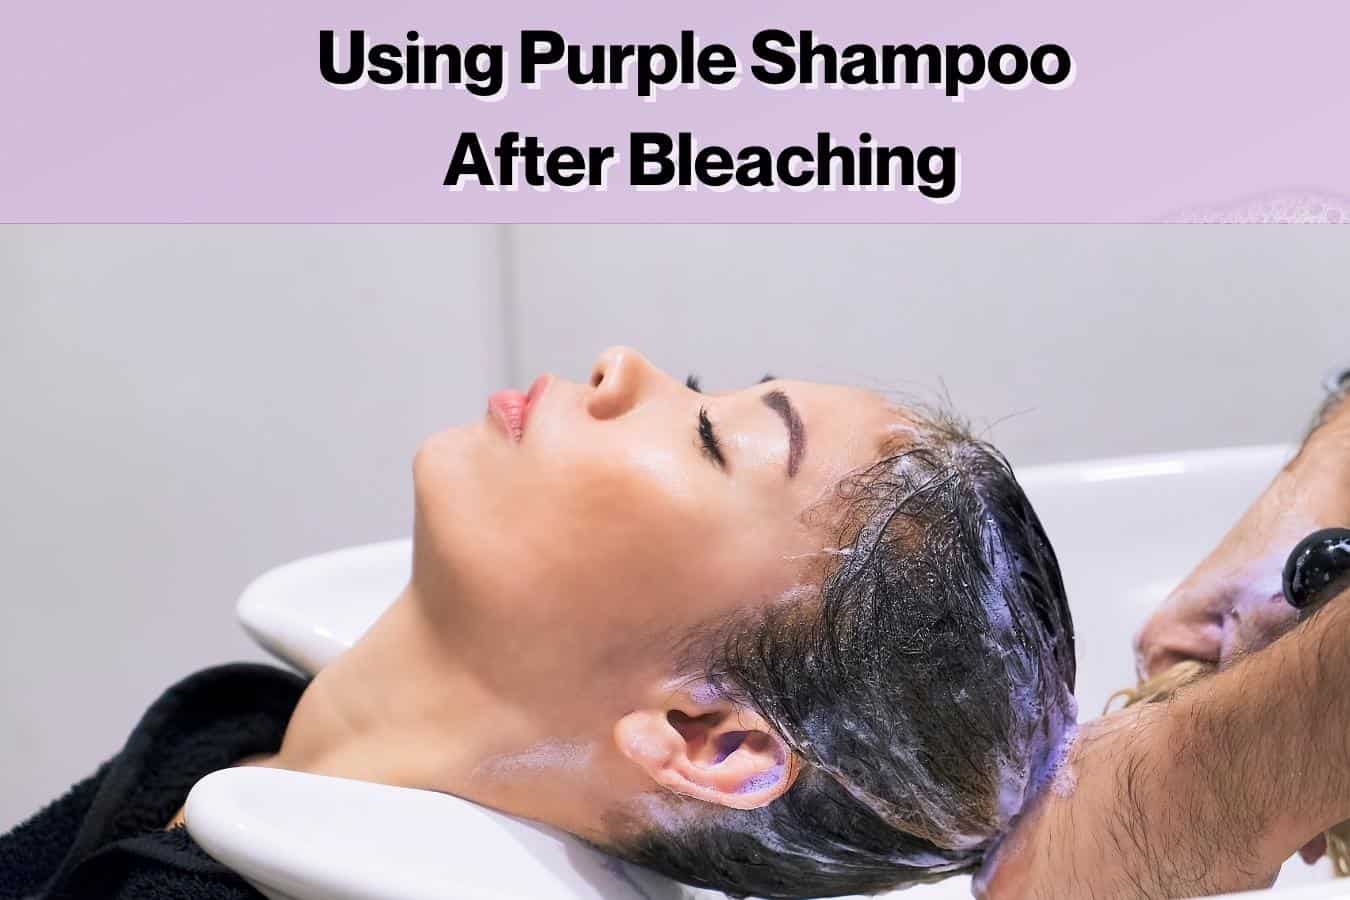 How Soon Can I Use Purple Shampoo After Bleaching